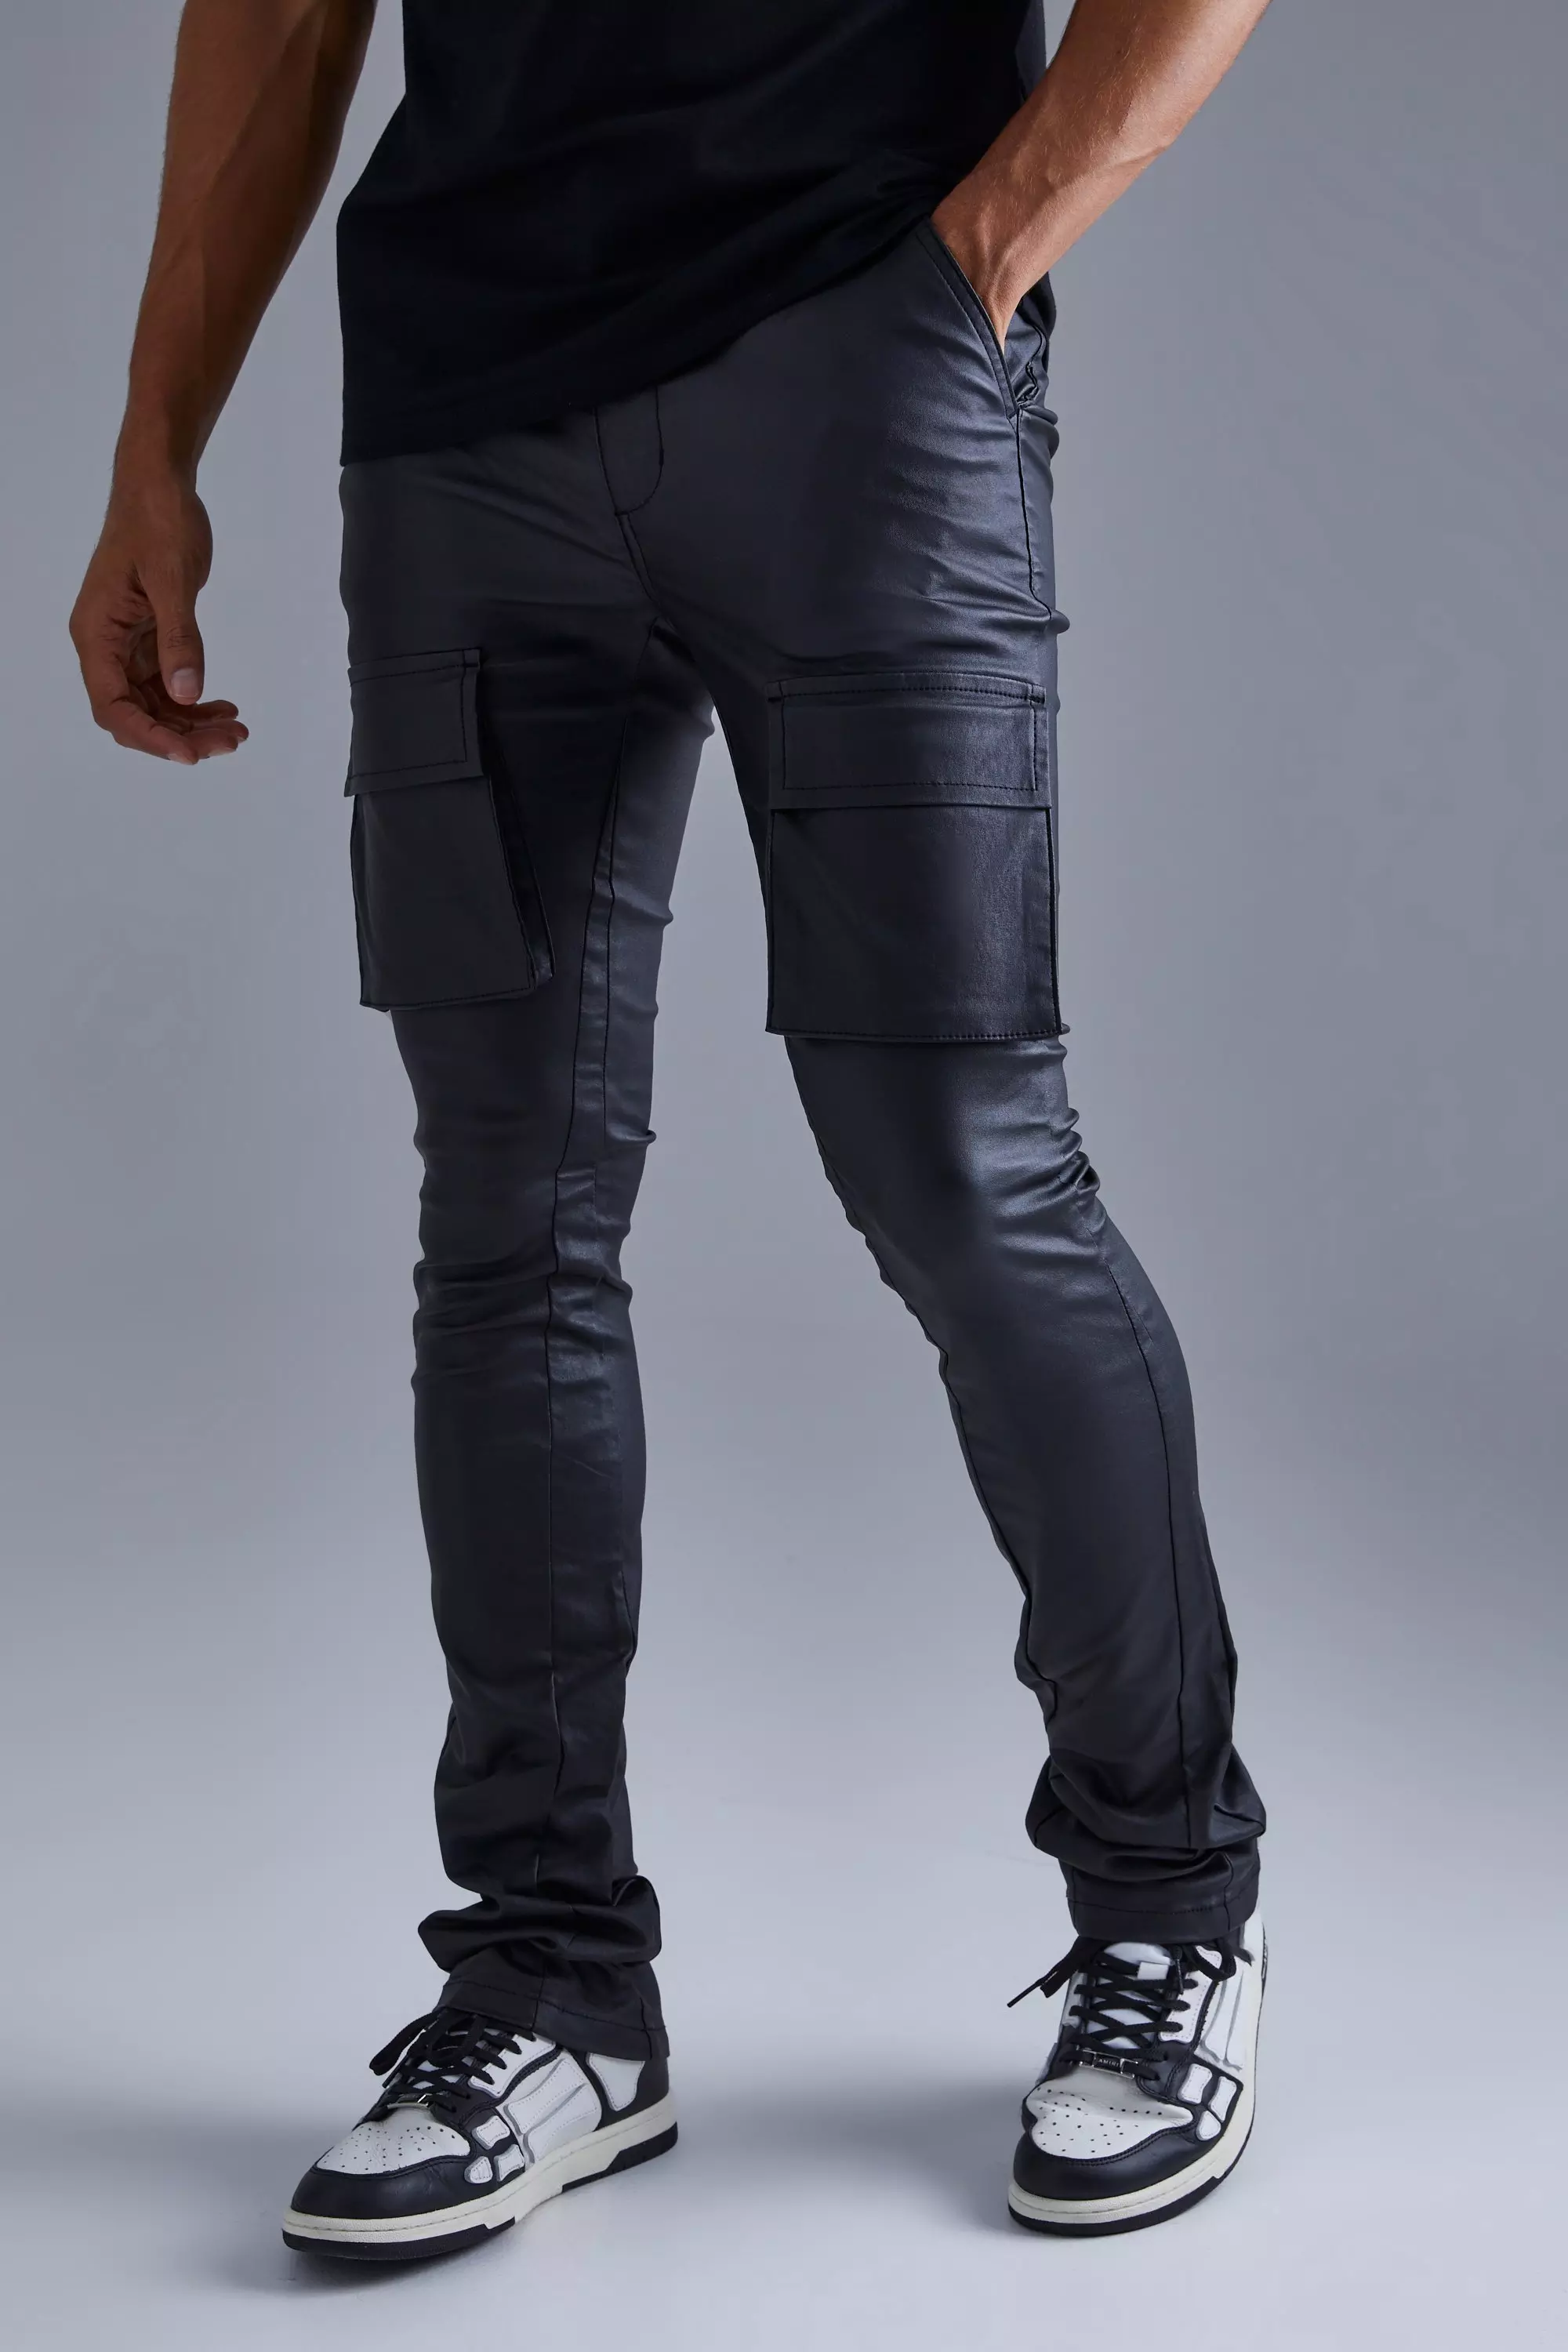 Men's Black Slim Fit Flare Jeans ‐ Phix